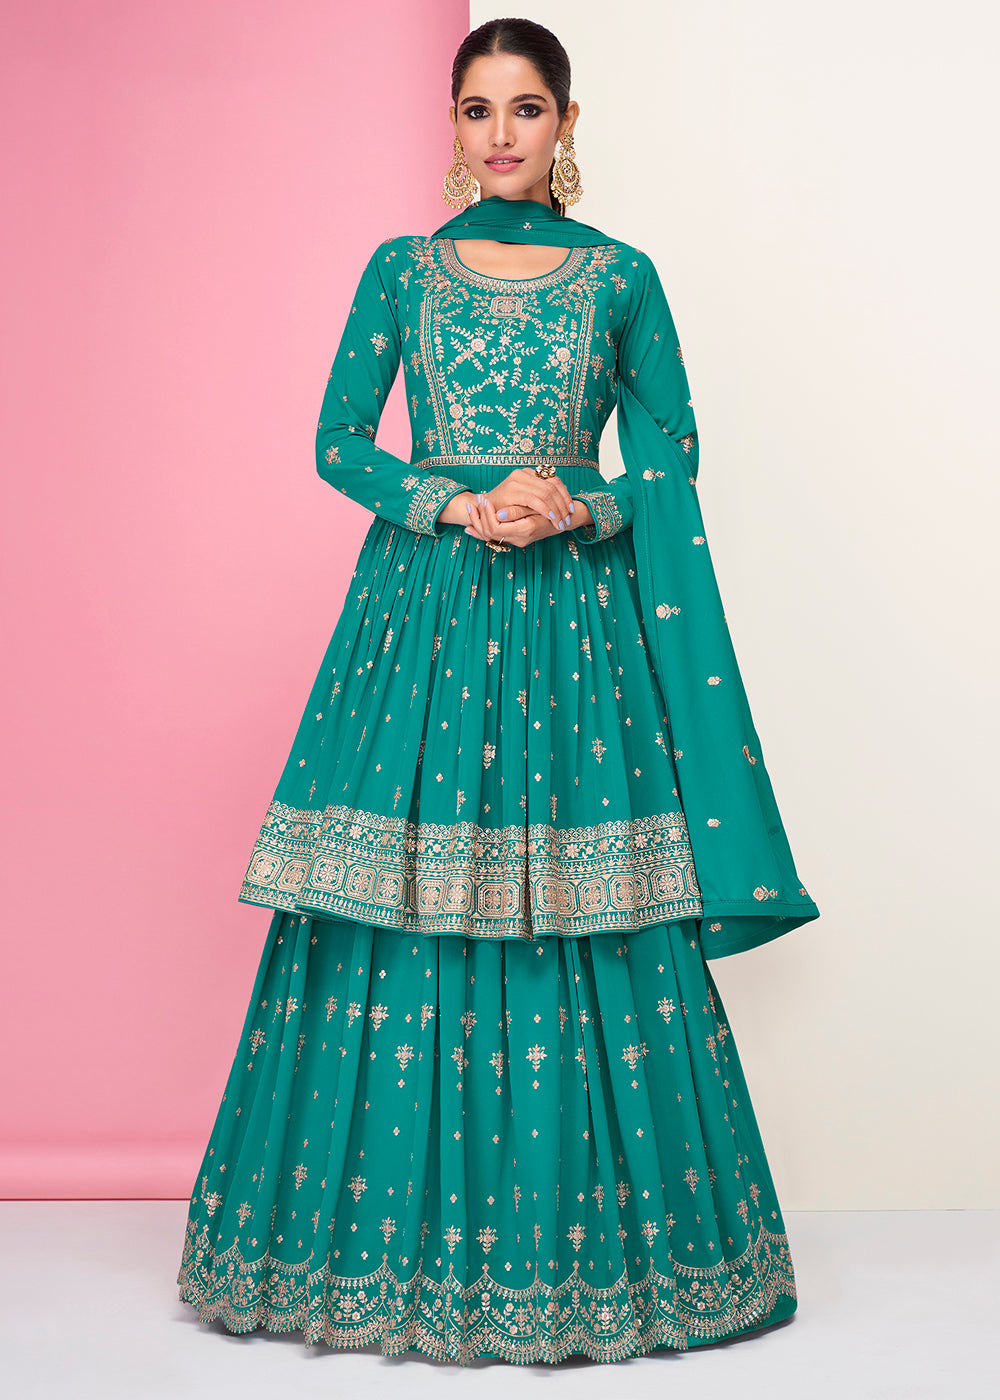 Buy Now Pretty Turquoise Sharara Top Style Lehenga Anarkali Online in USA, UK, Australia, New Zealand, Canada & Worldwide at Empress Clothing. 